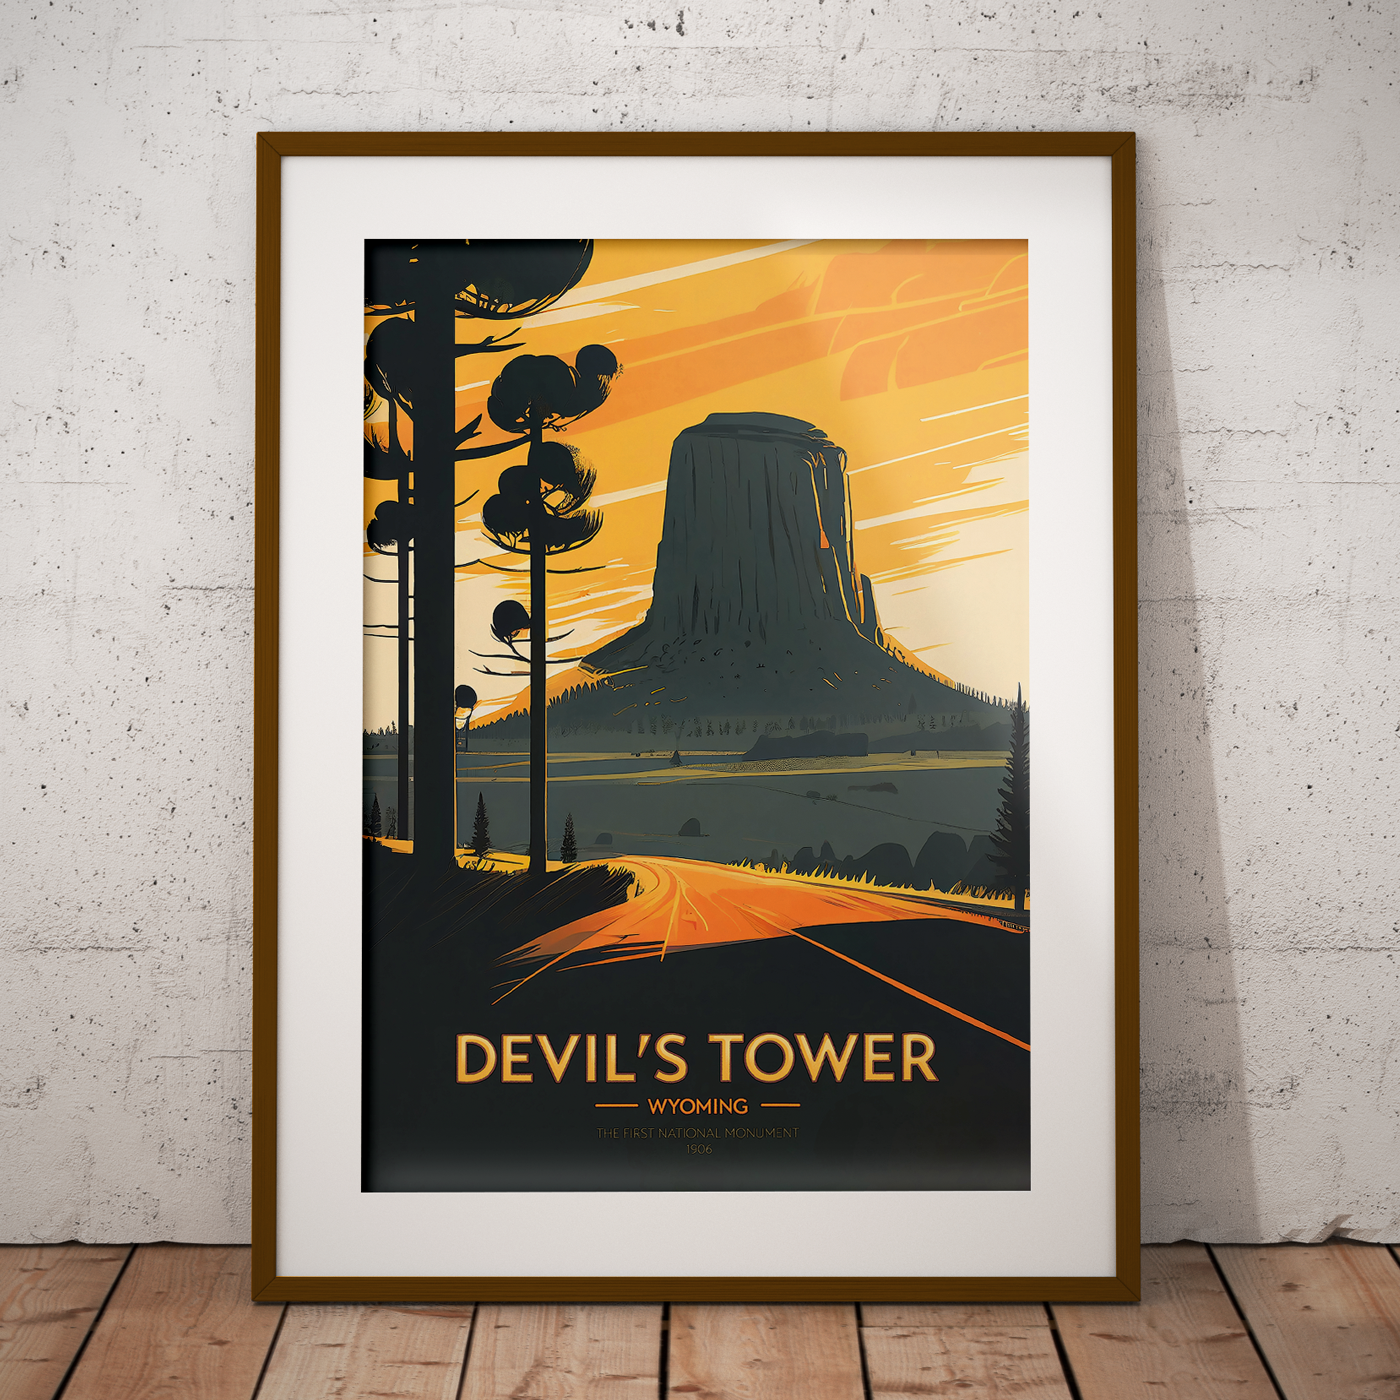 Devil's Tower Vintage Travel Wall Art Print in a mockup frame